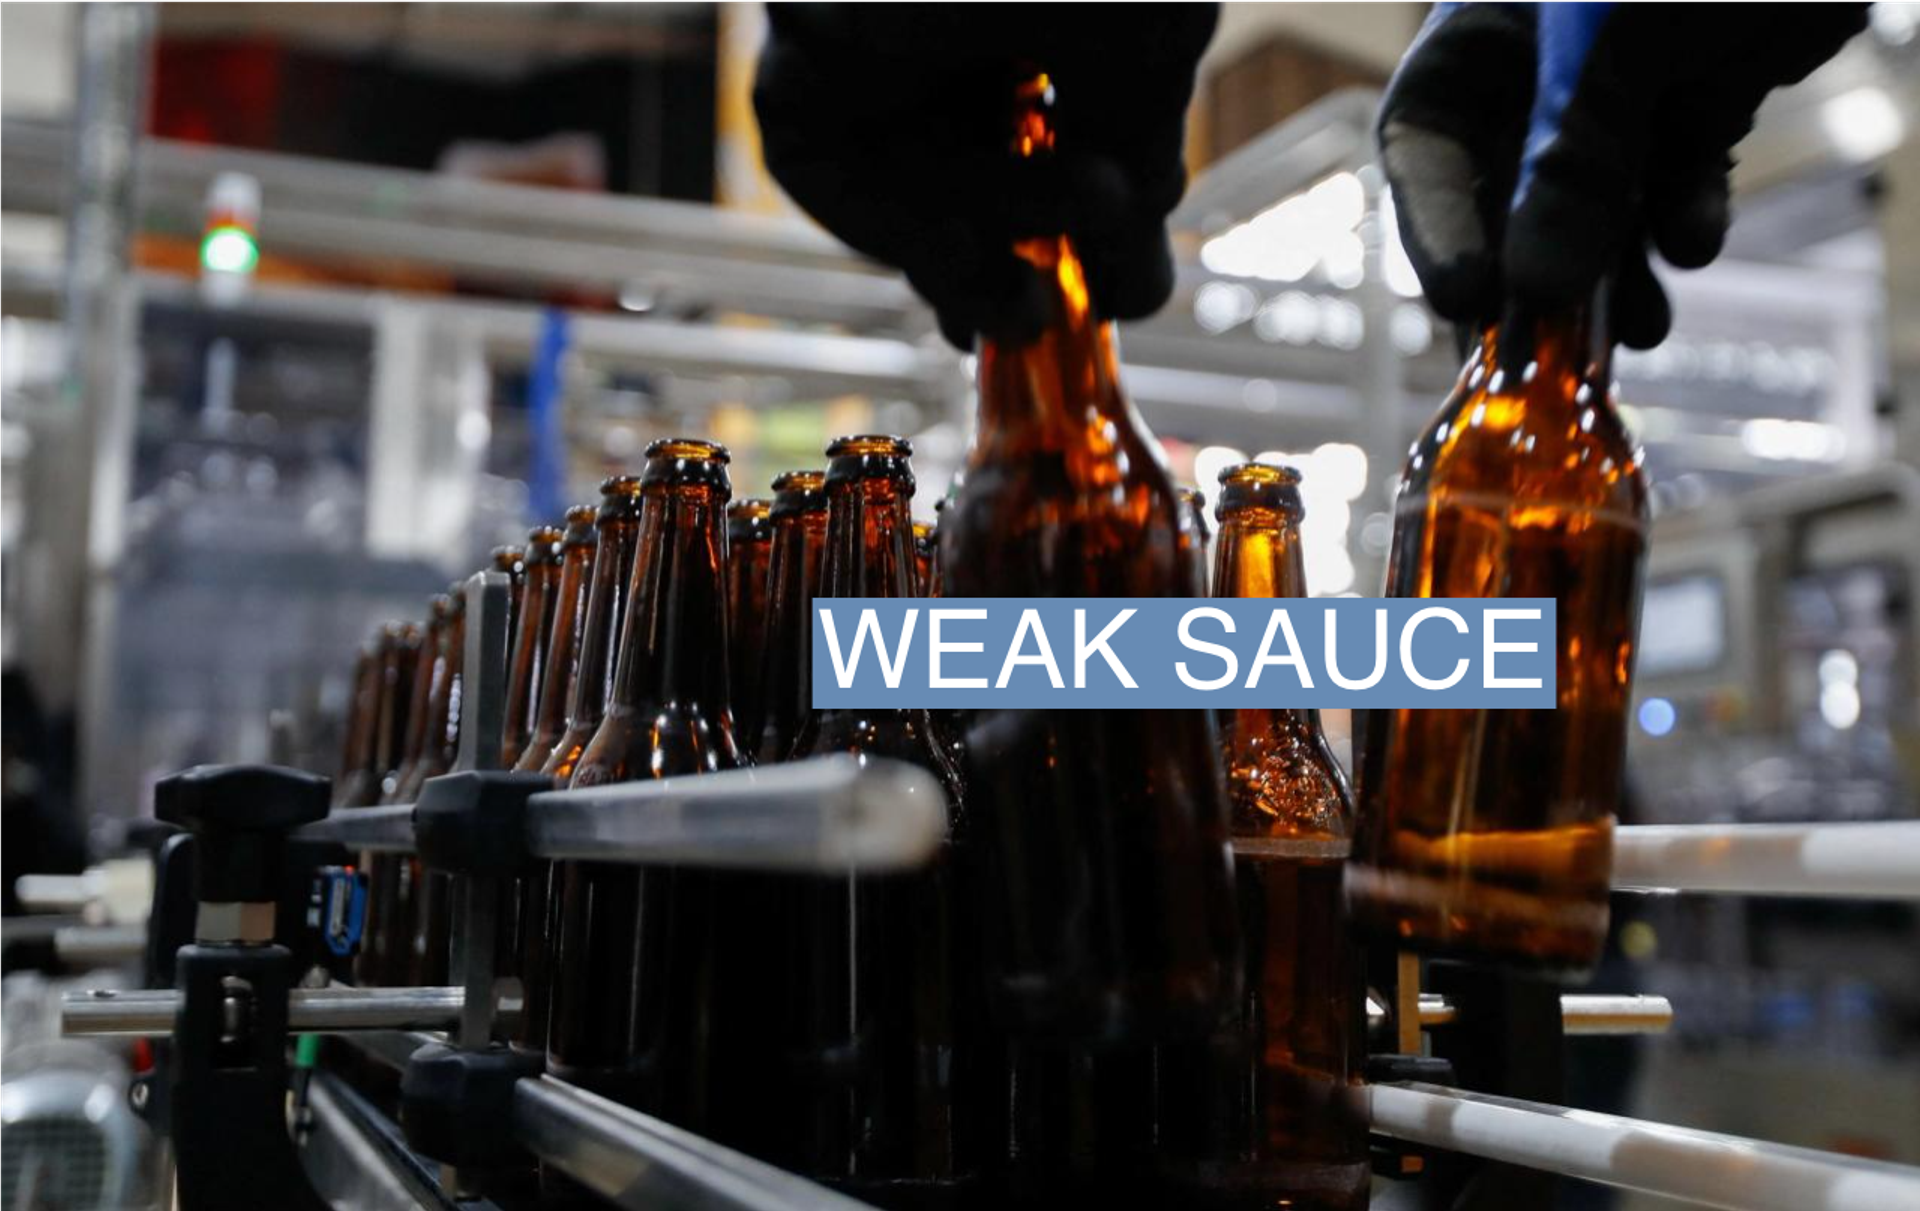 An employee arranges beer bottles on a conveyor belt along a brewery production line.